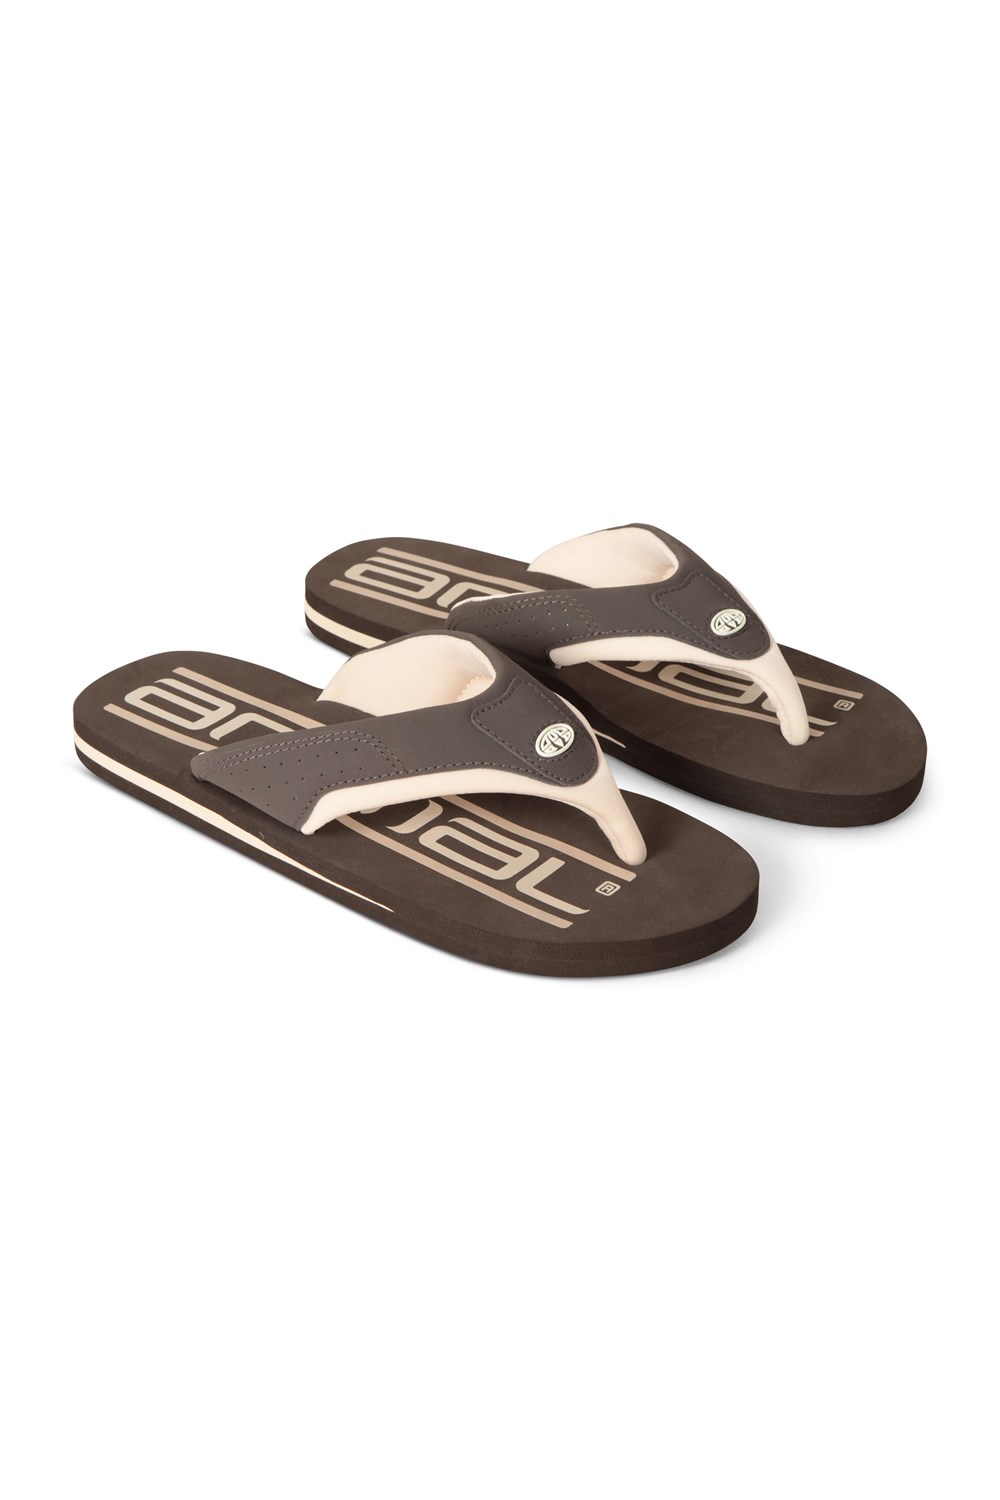 Animal Mens Jekyl Logo Flip Flop Men Beach Summer Recycled Sandals  Lightweight | eBay